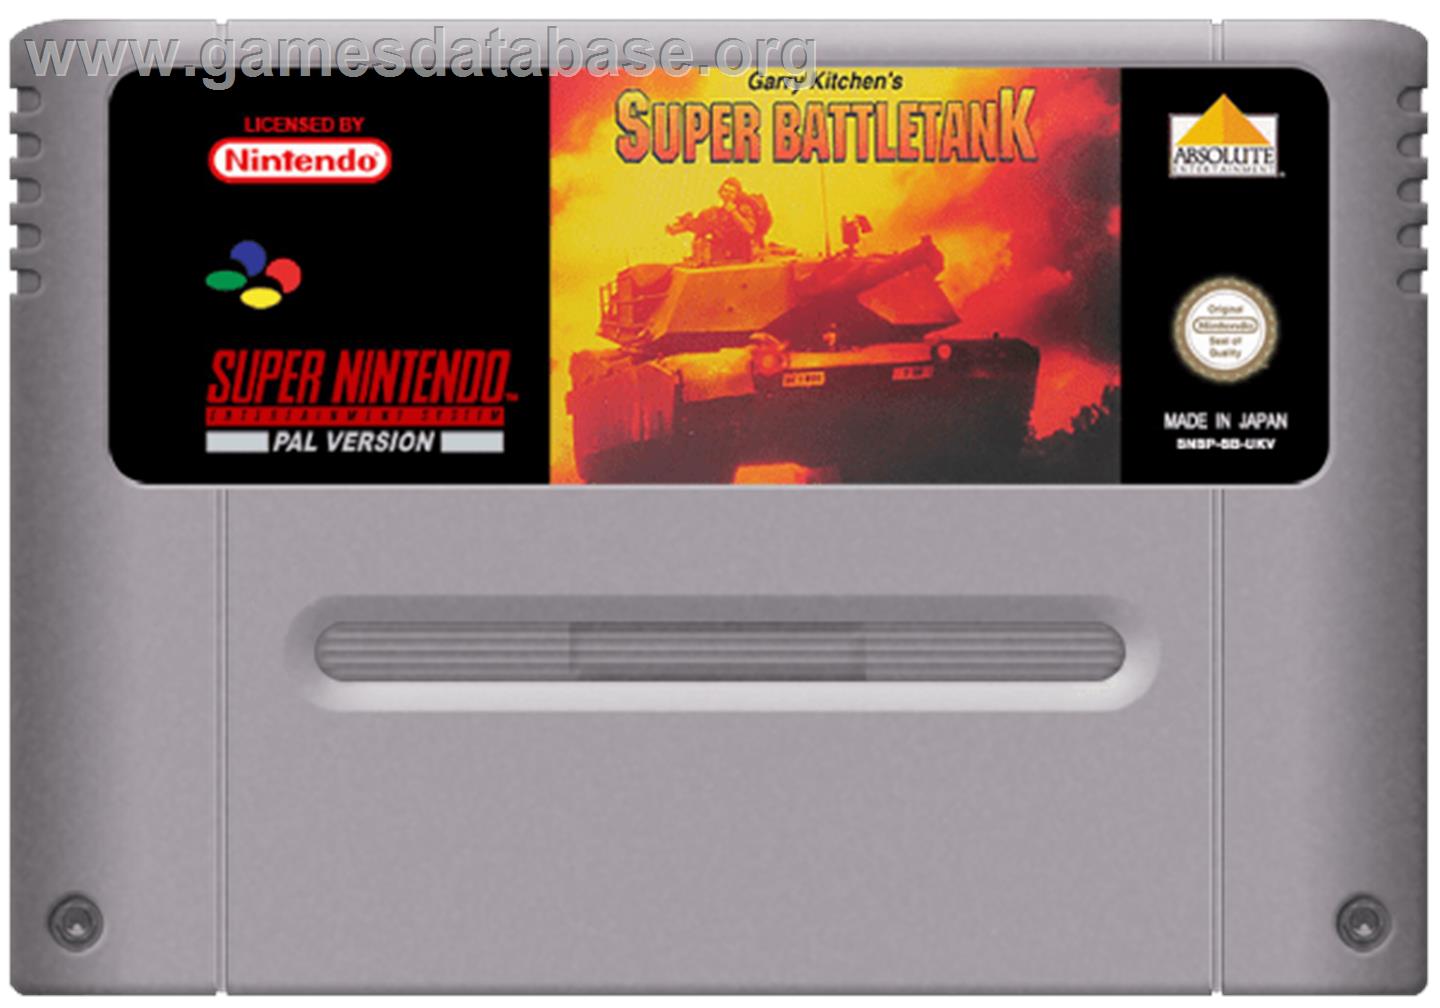 Garry Kitchen's Super Battletank: War in the Gulf - Nintendo SNES - Artwork - Cartridge